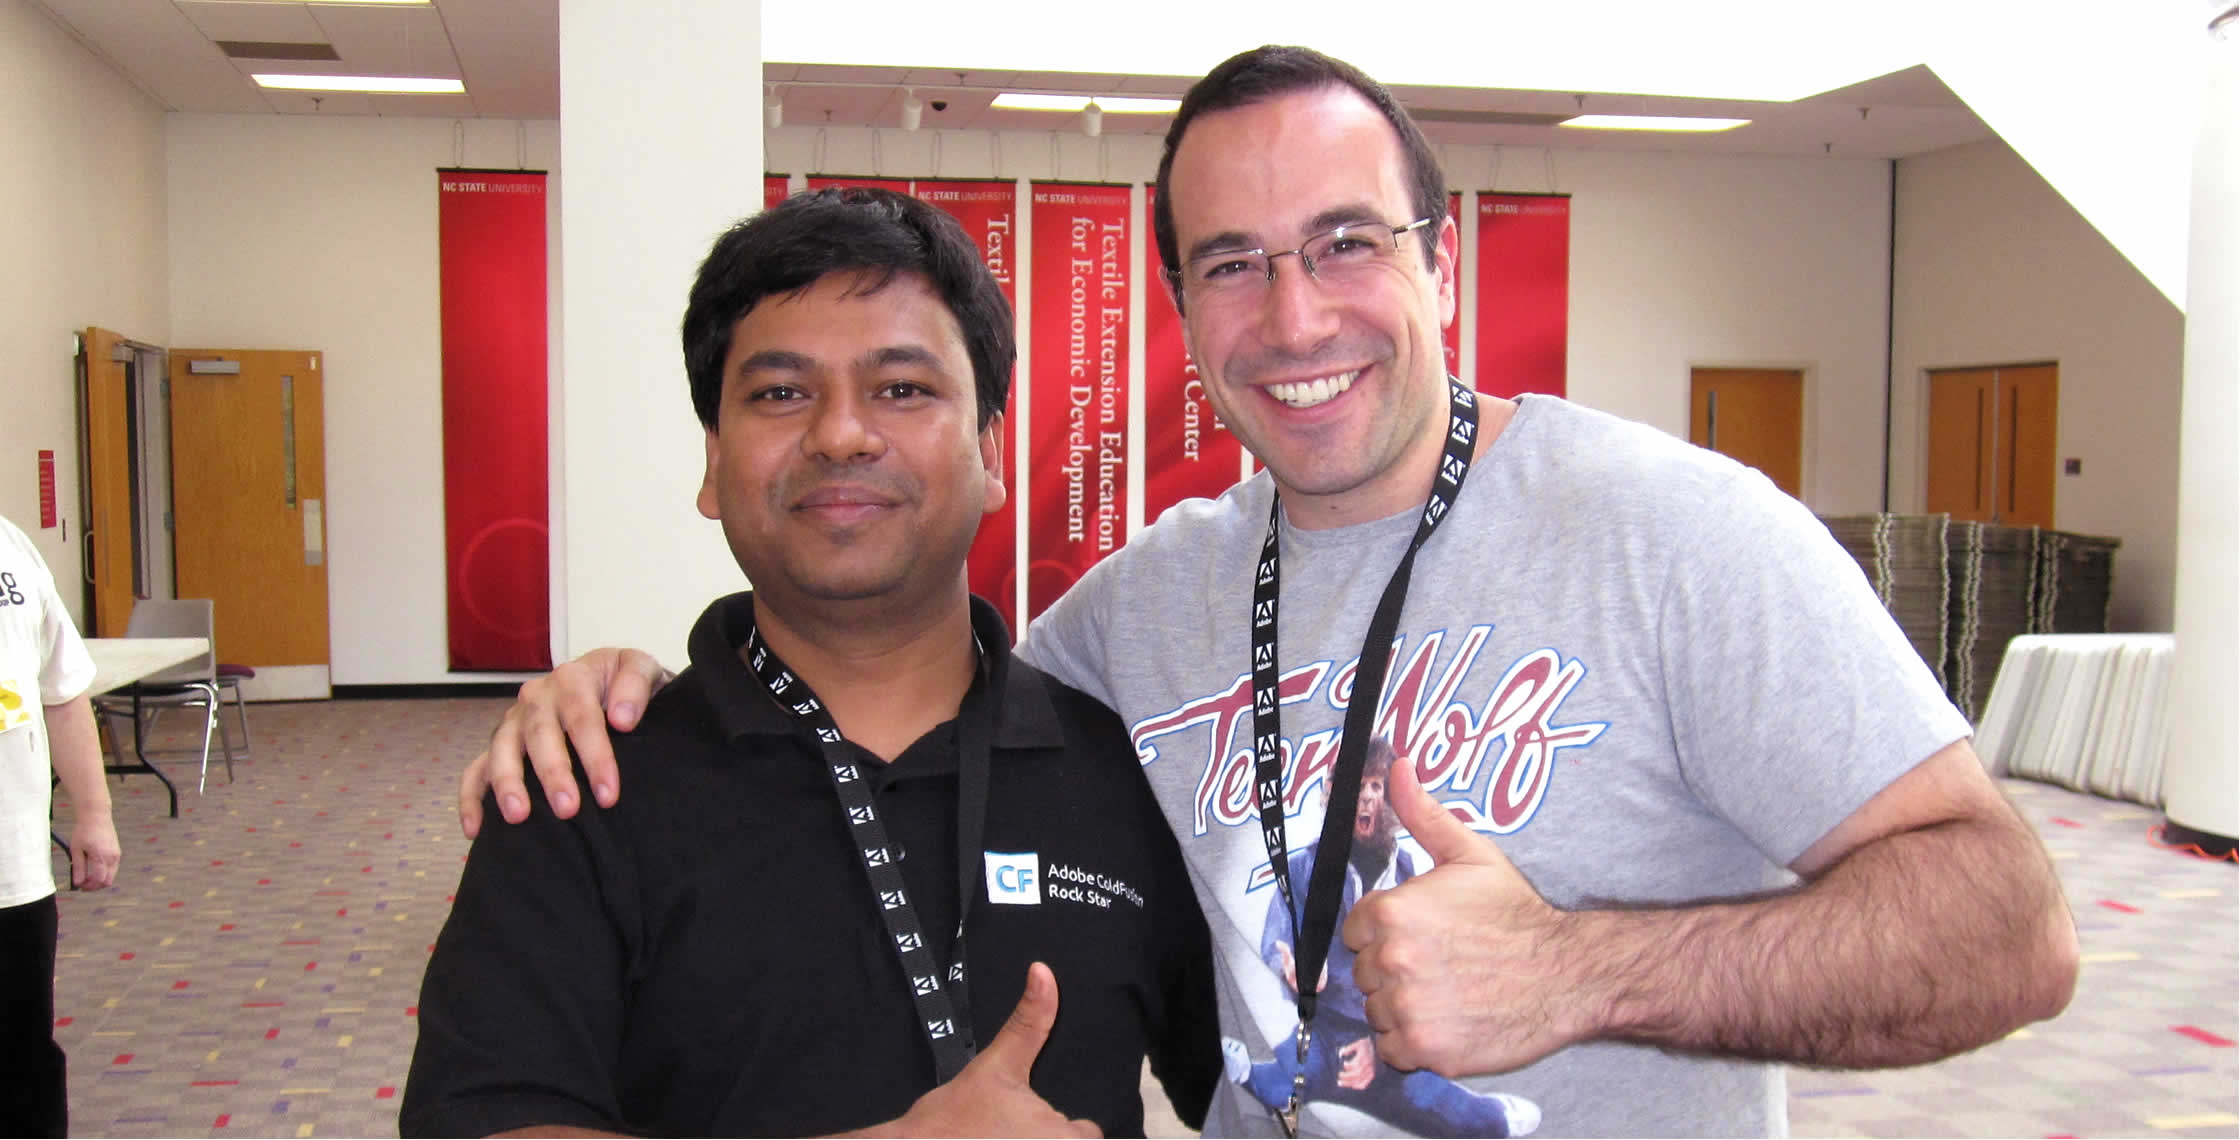 Ben Nadel at NCDevCon 2011 (Raleigh, NC) with: Awdhesh Kumar